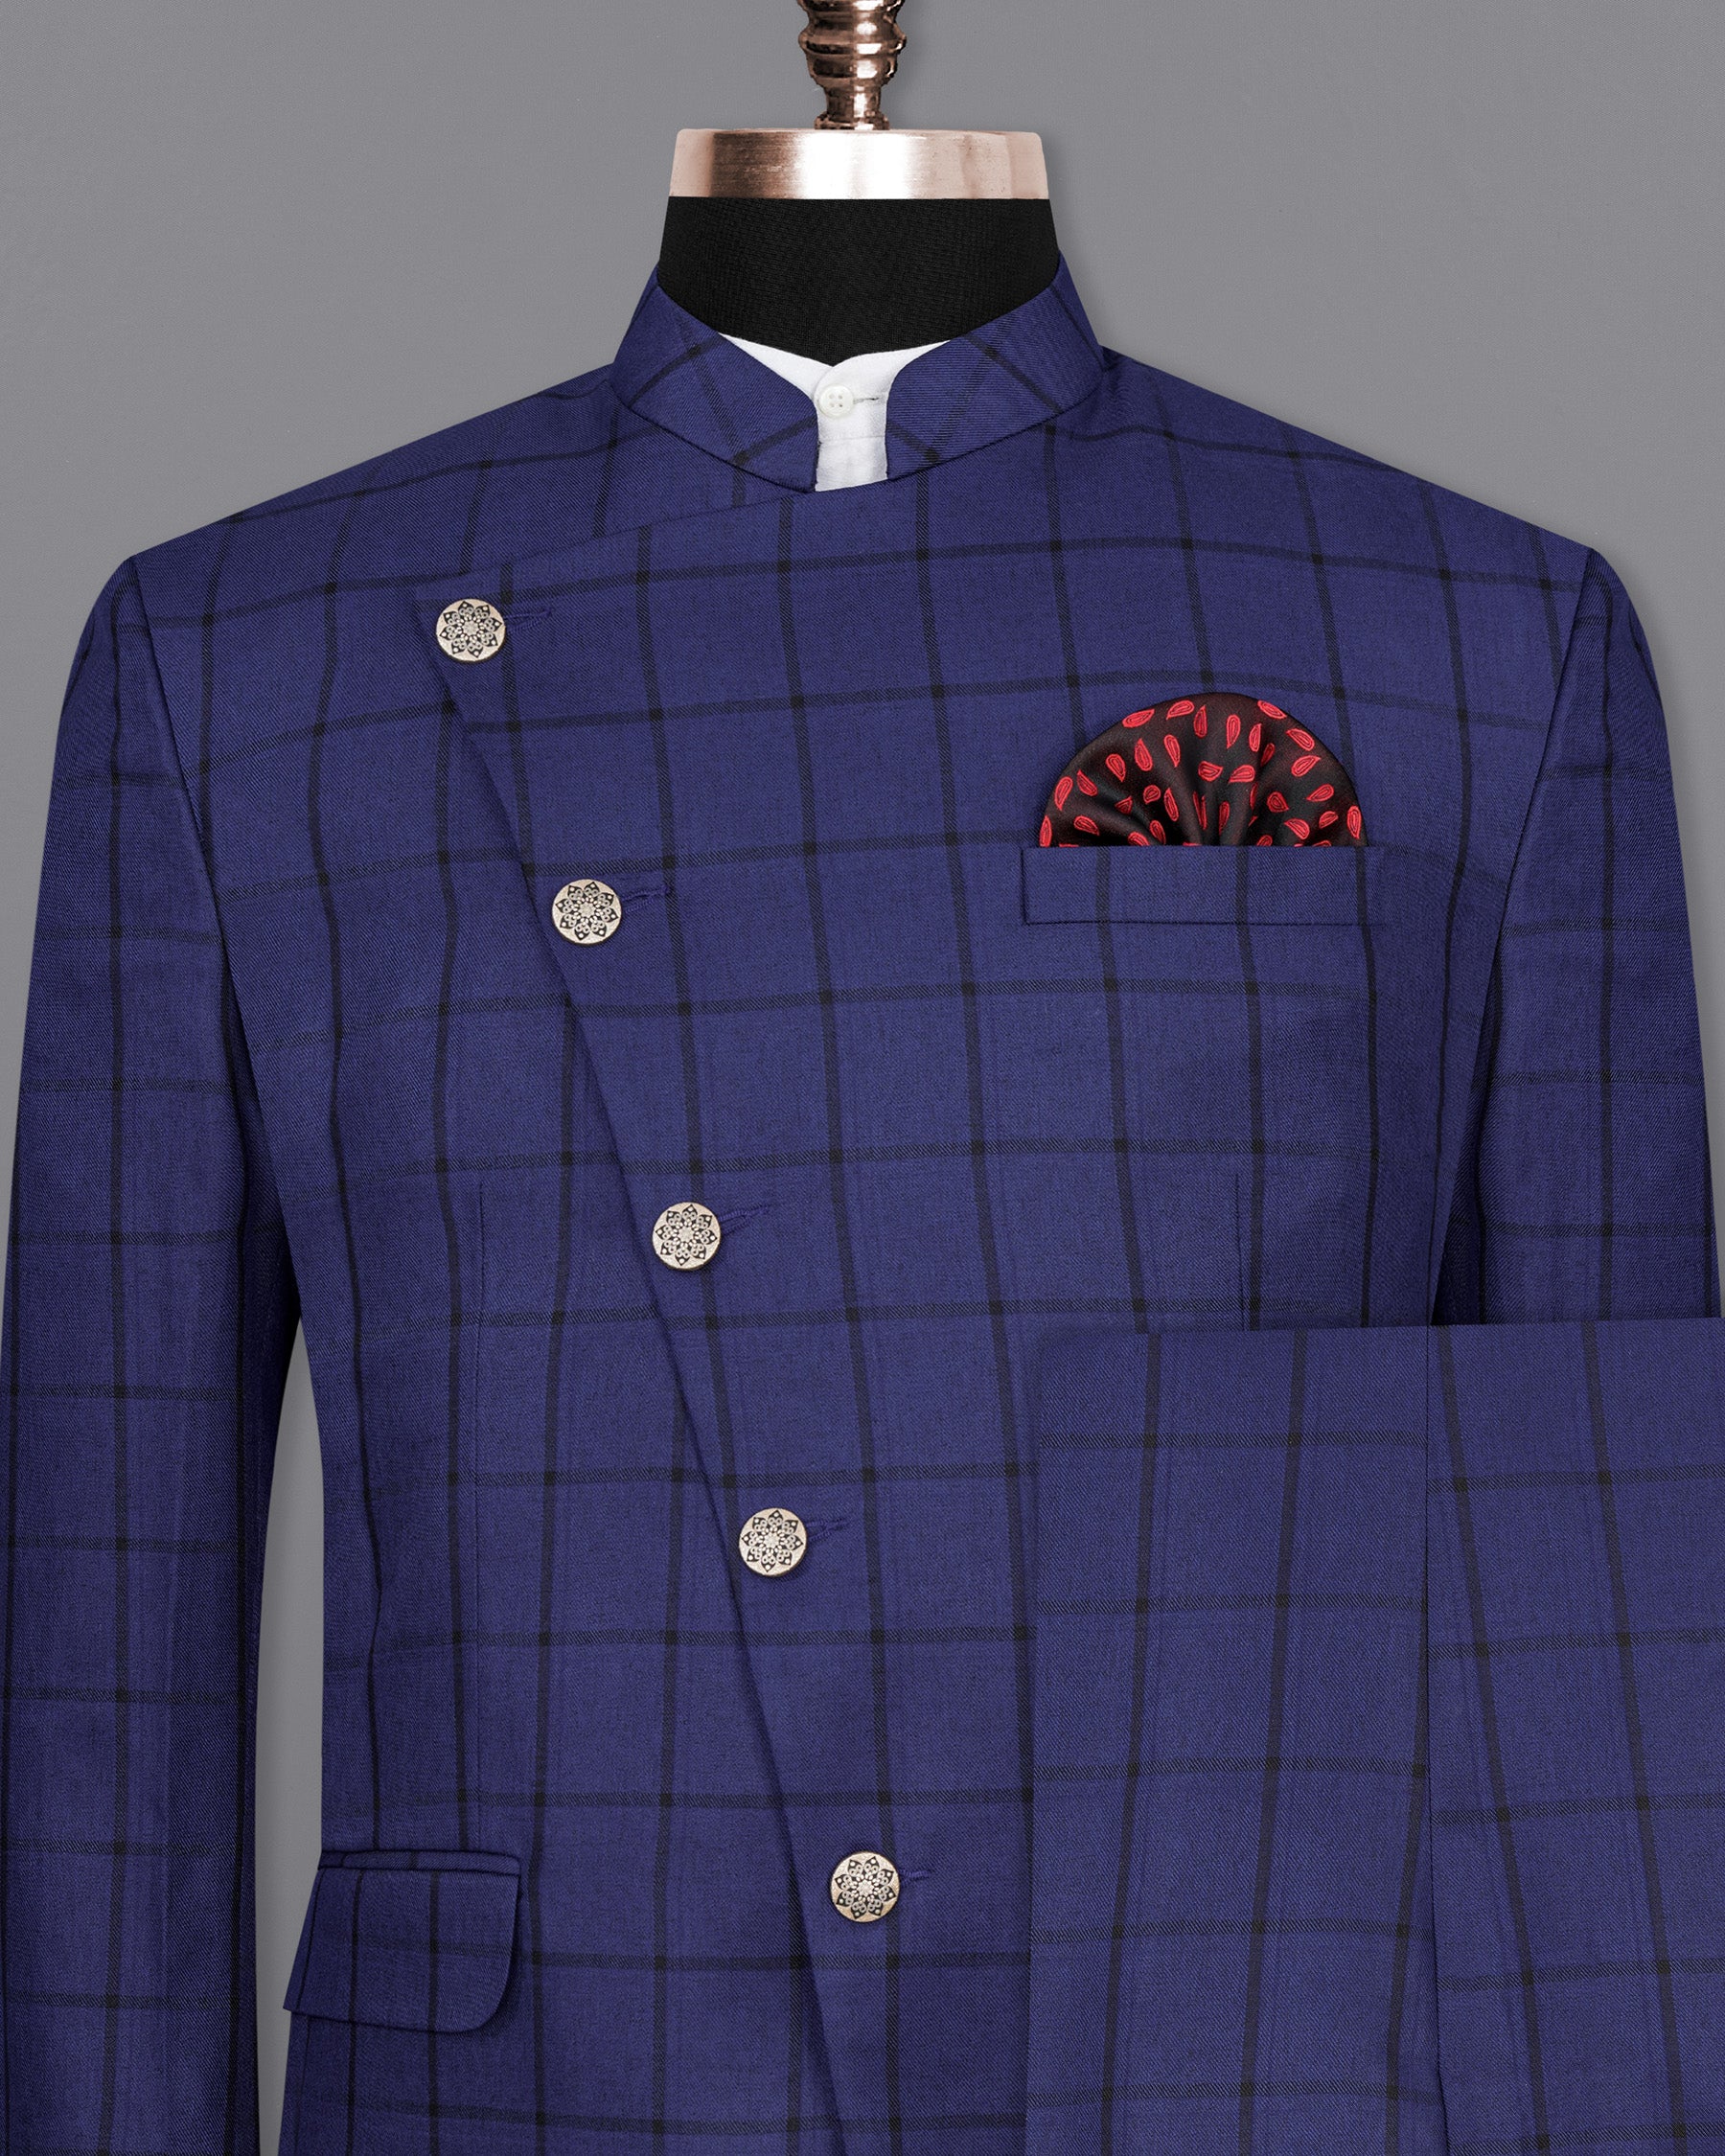 Indigo Blue Jodhpuri Suit - Hangrr